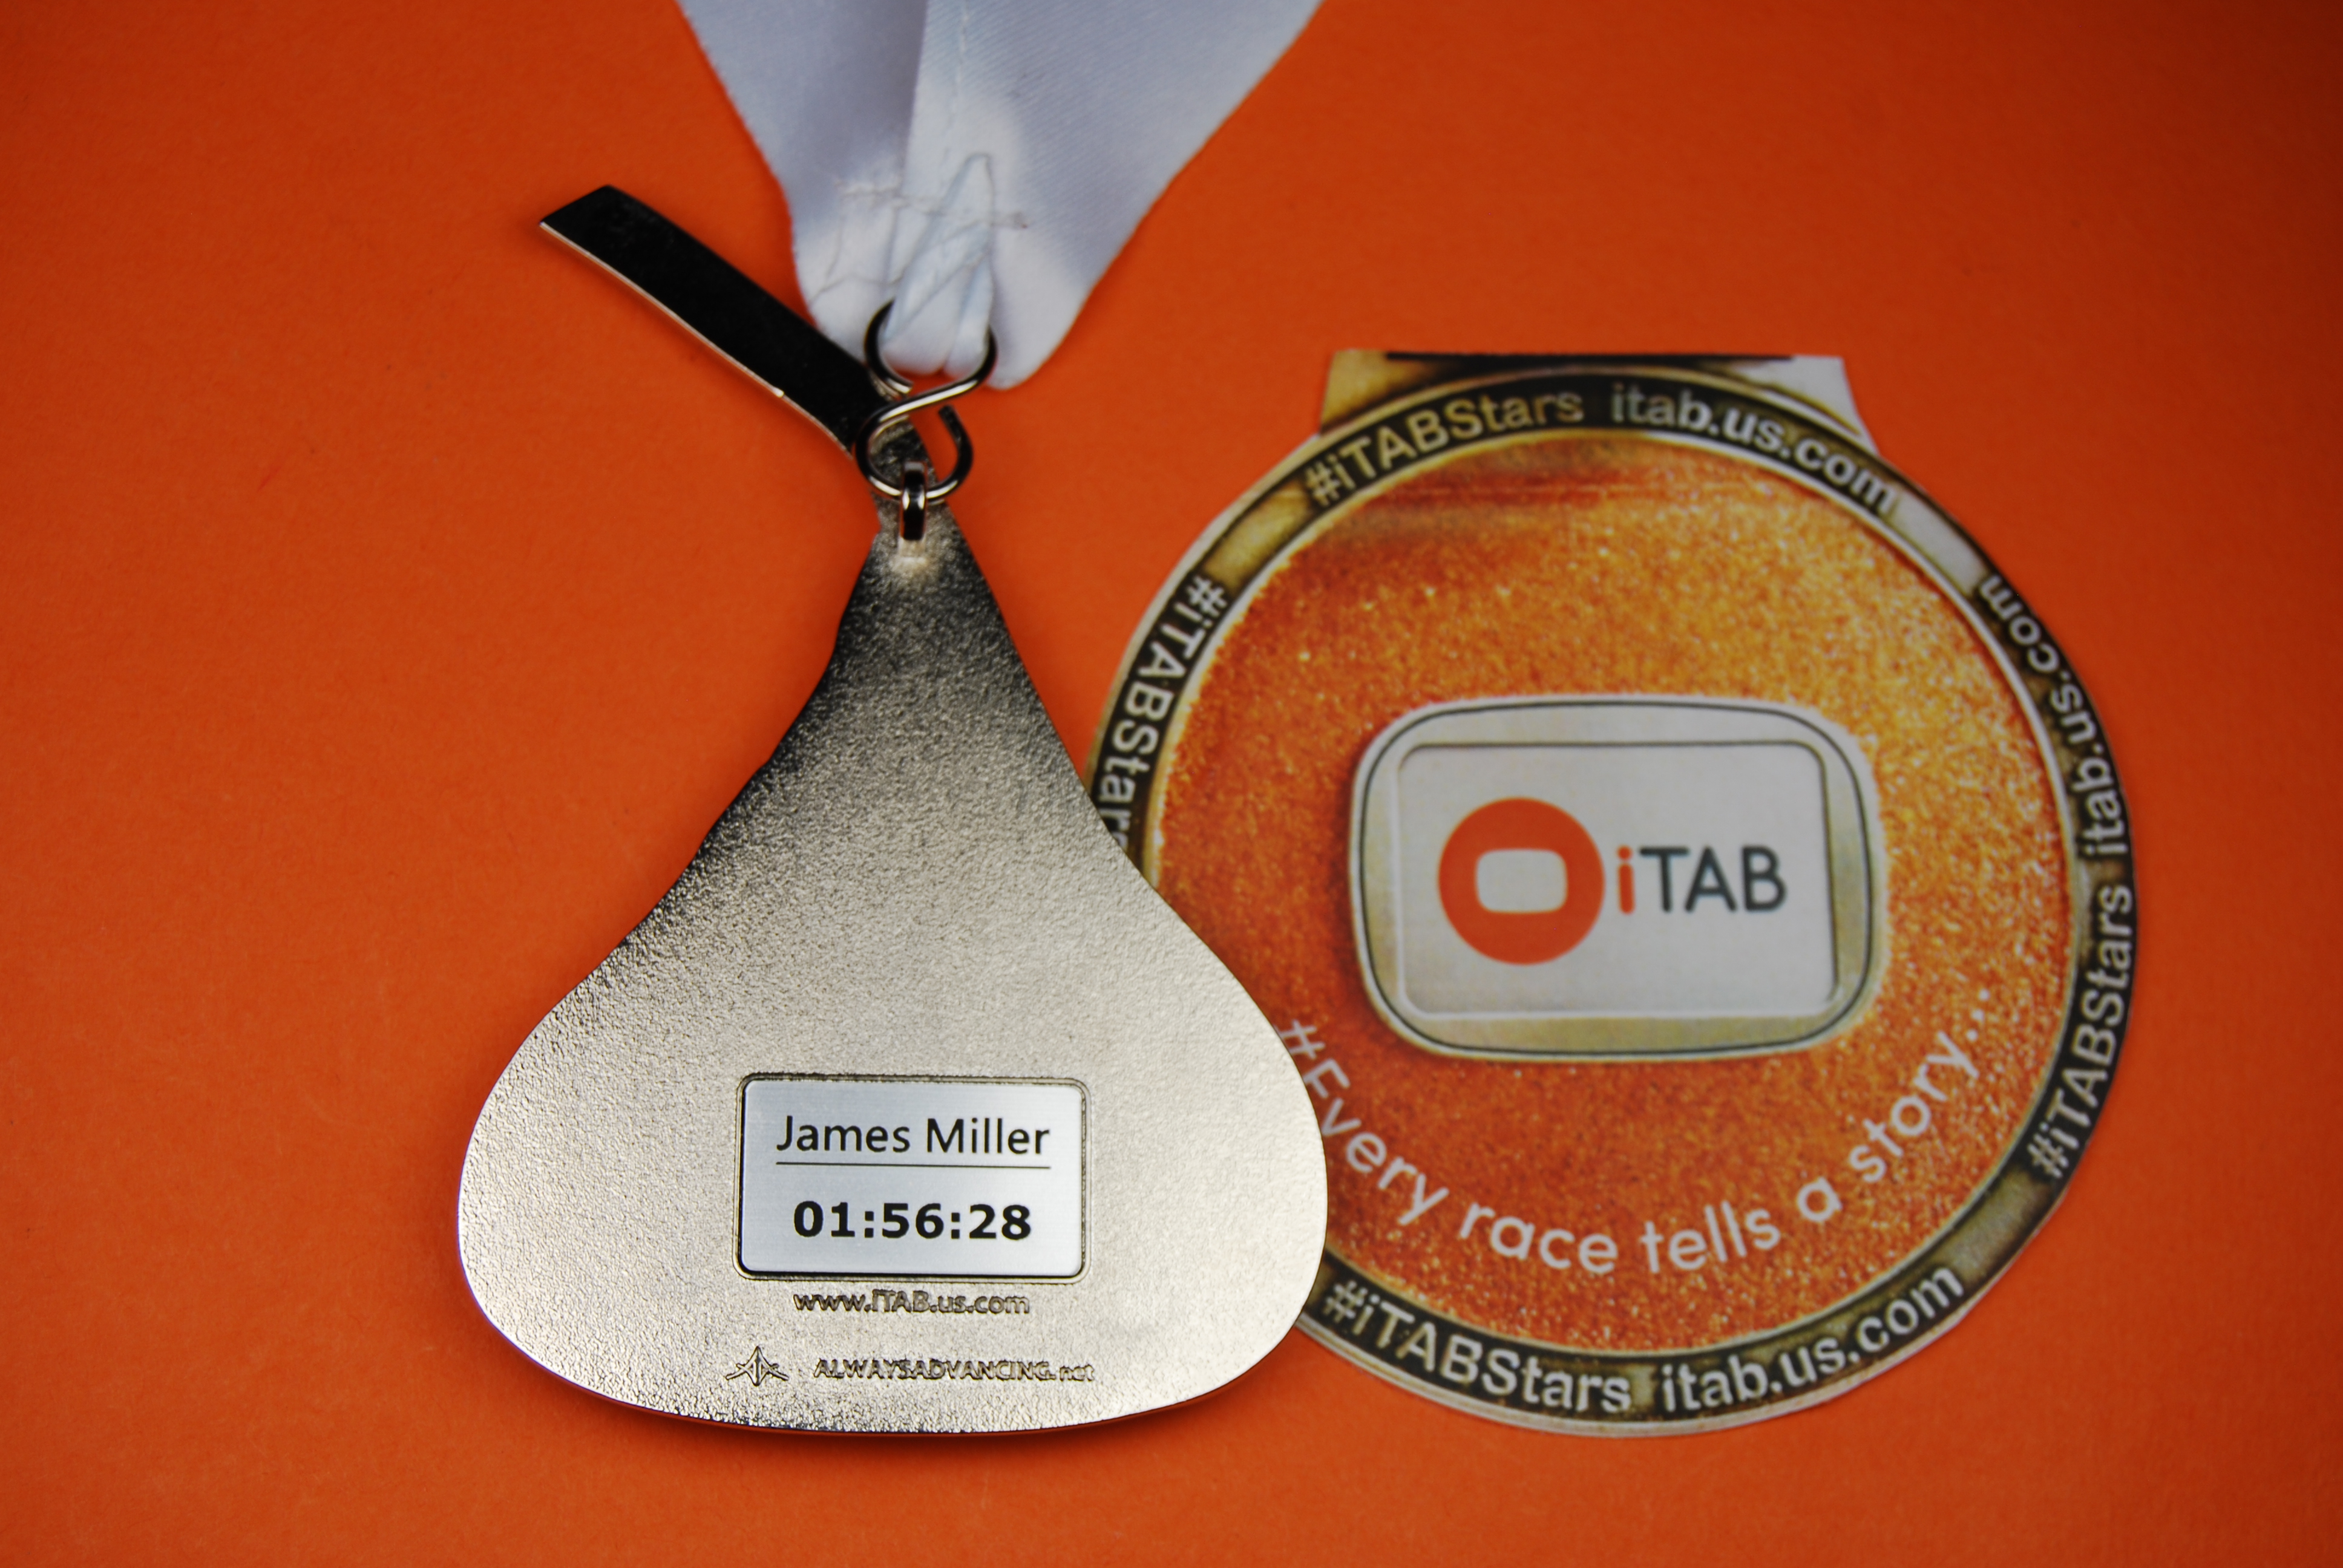 itab medal